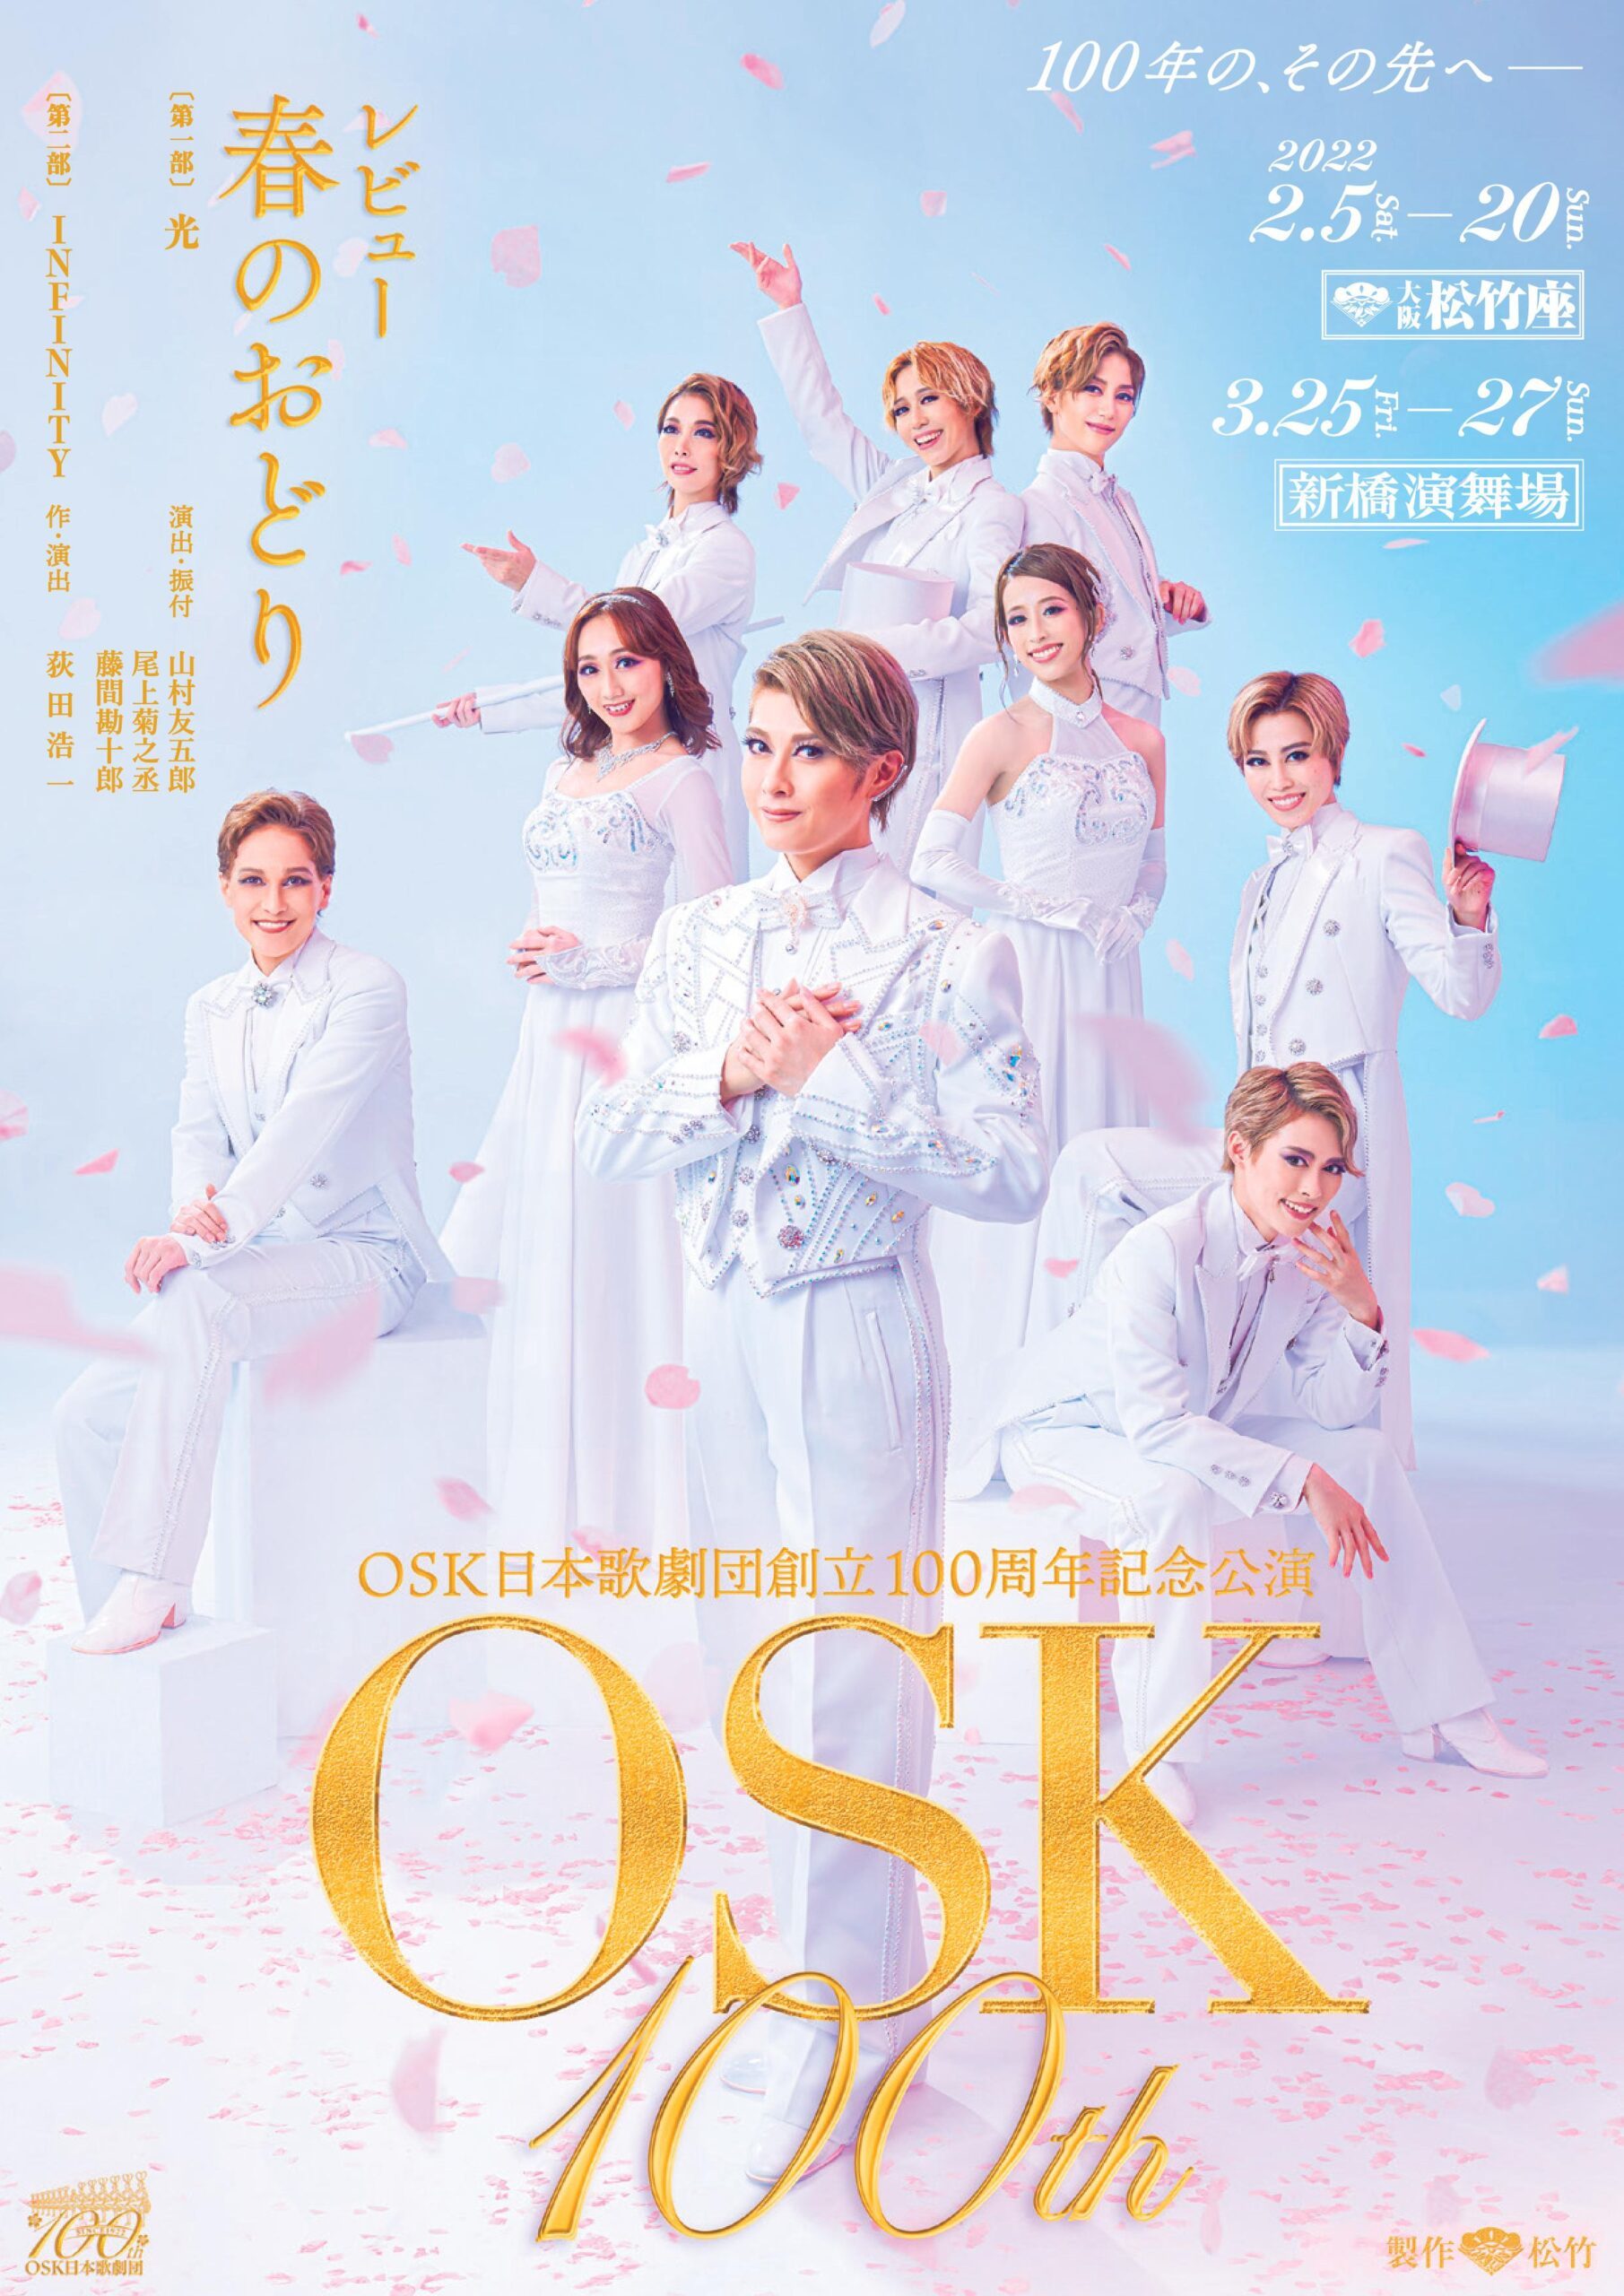 『OSK日本歌劇団創立100周年記念公演「レビュー春のおどり」』